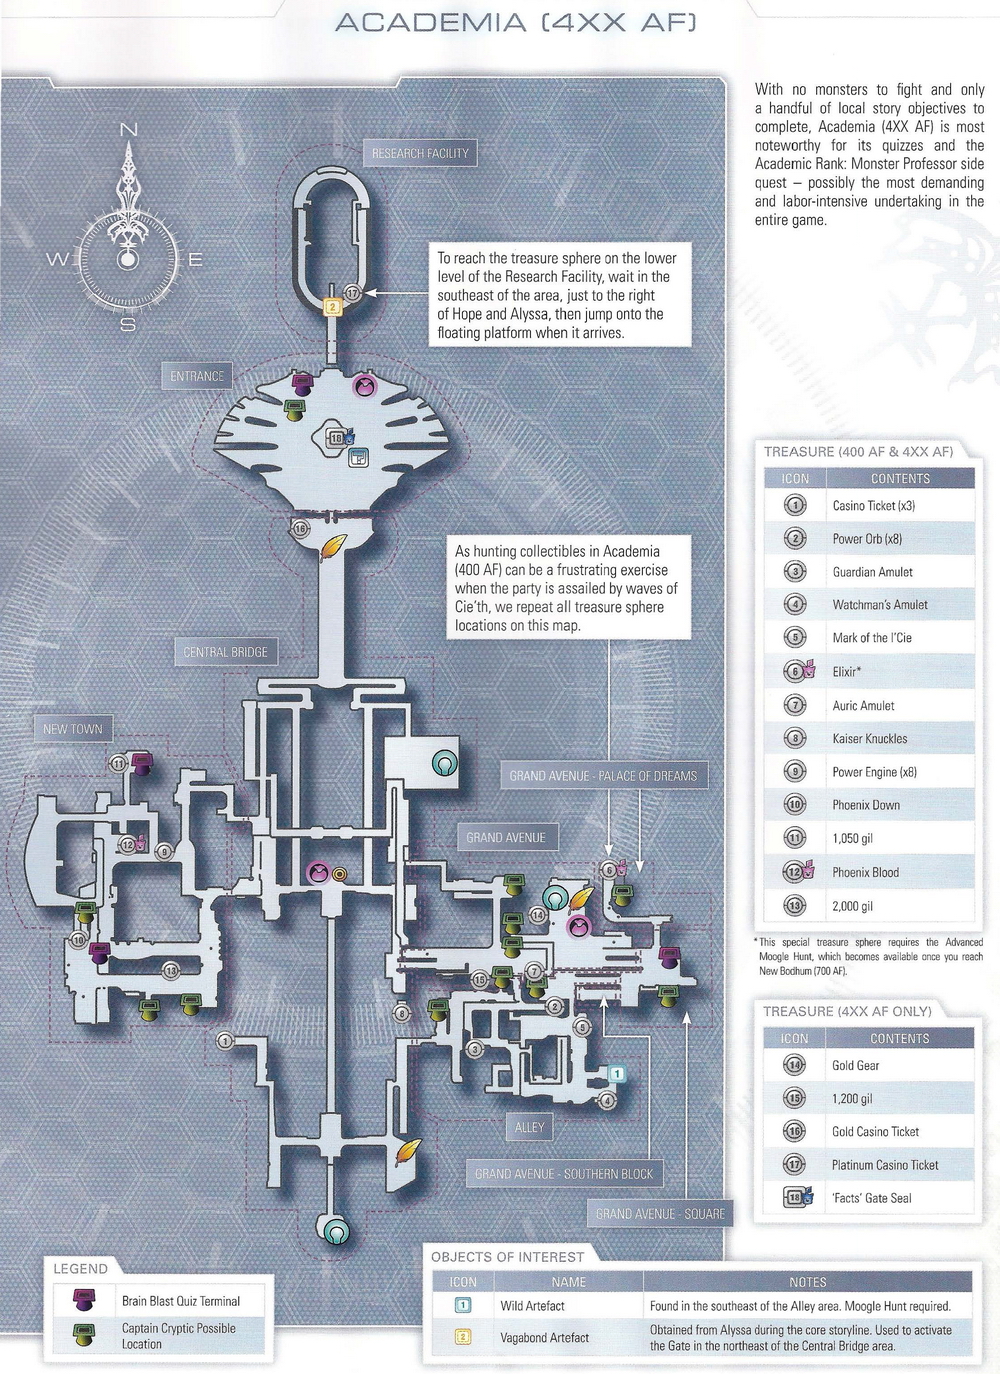 image-academia-map-ffxiii-2-complete-guide-jpg-final-fantasy-wiki-fandom-powered-by-wikia